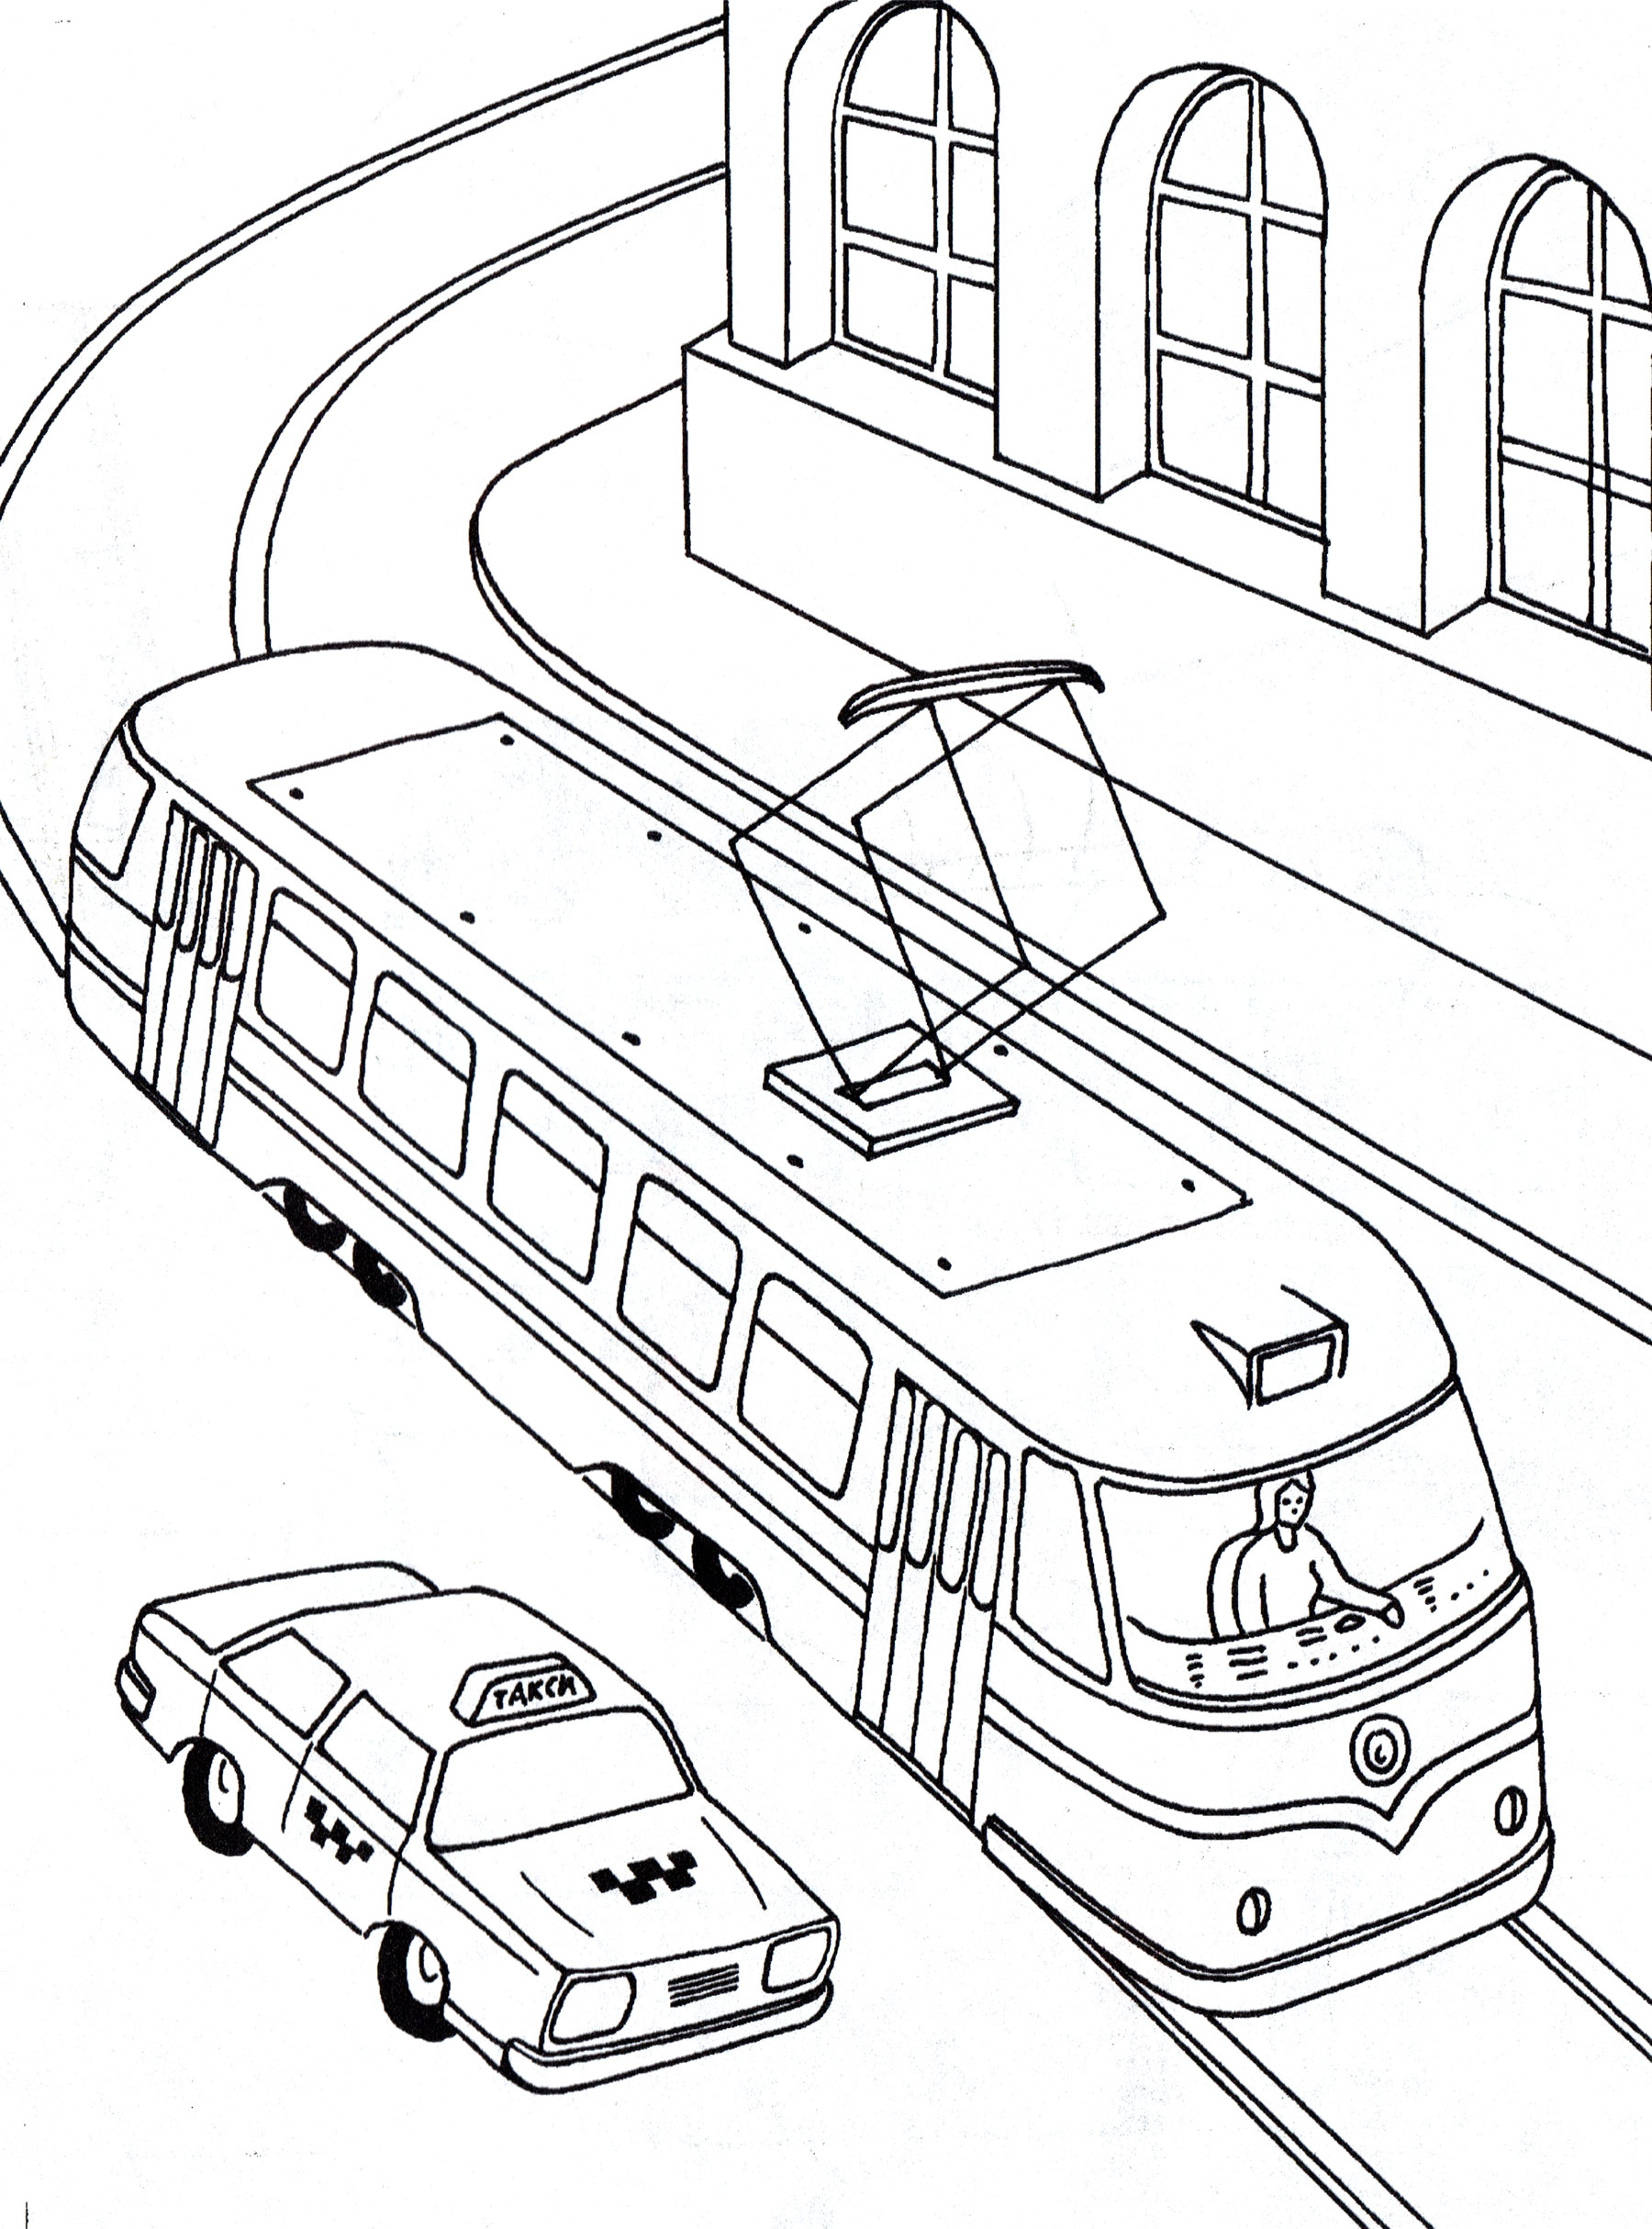 Картина-Раскраска - Старинный трамвай, 14.5х22см